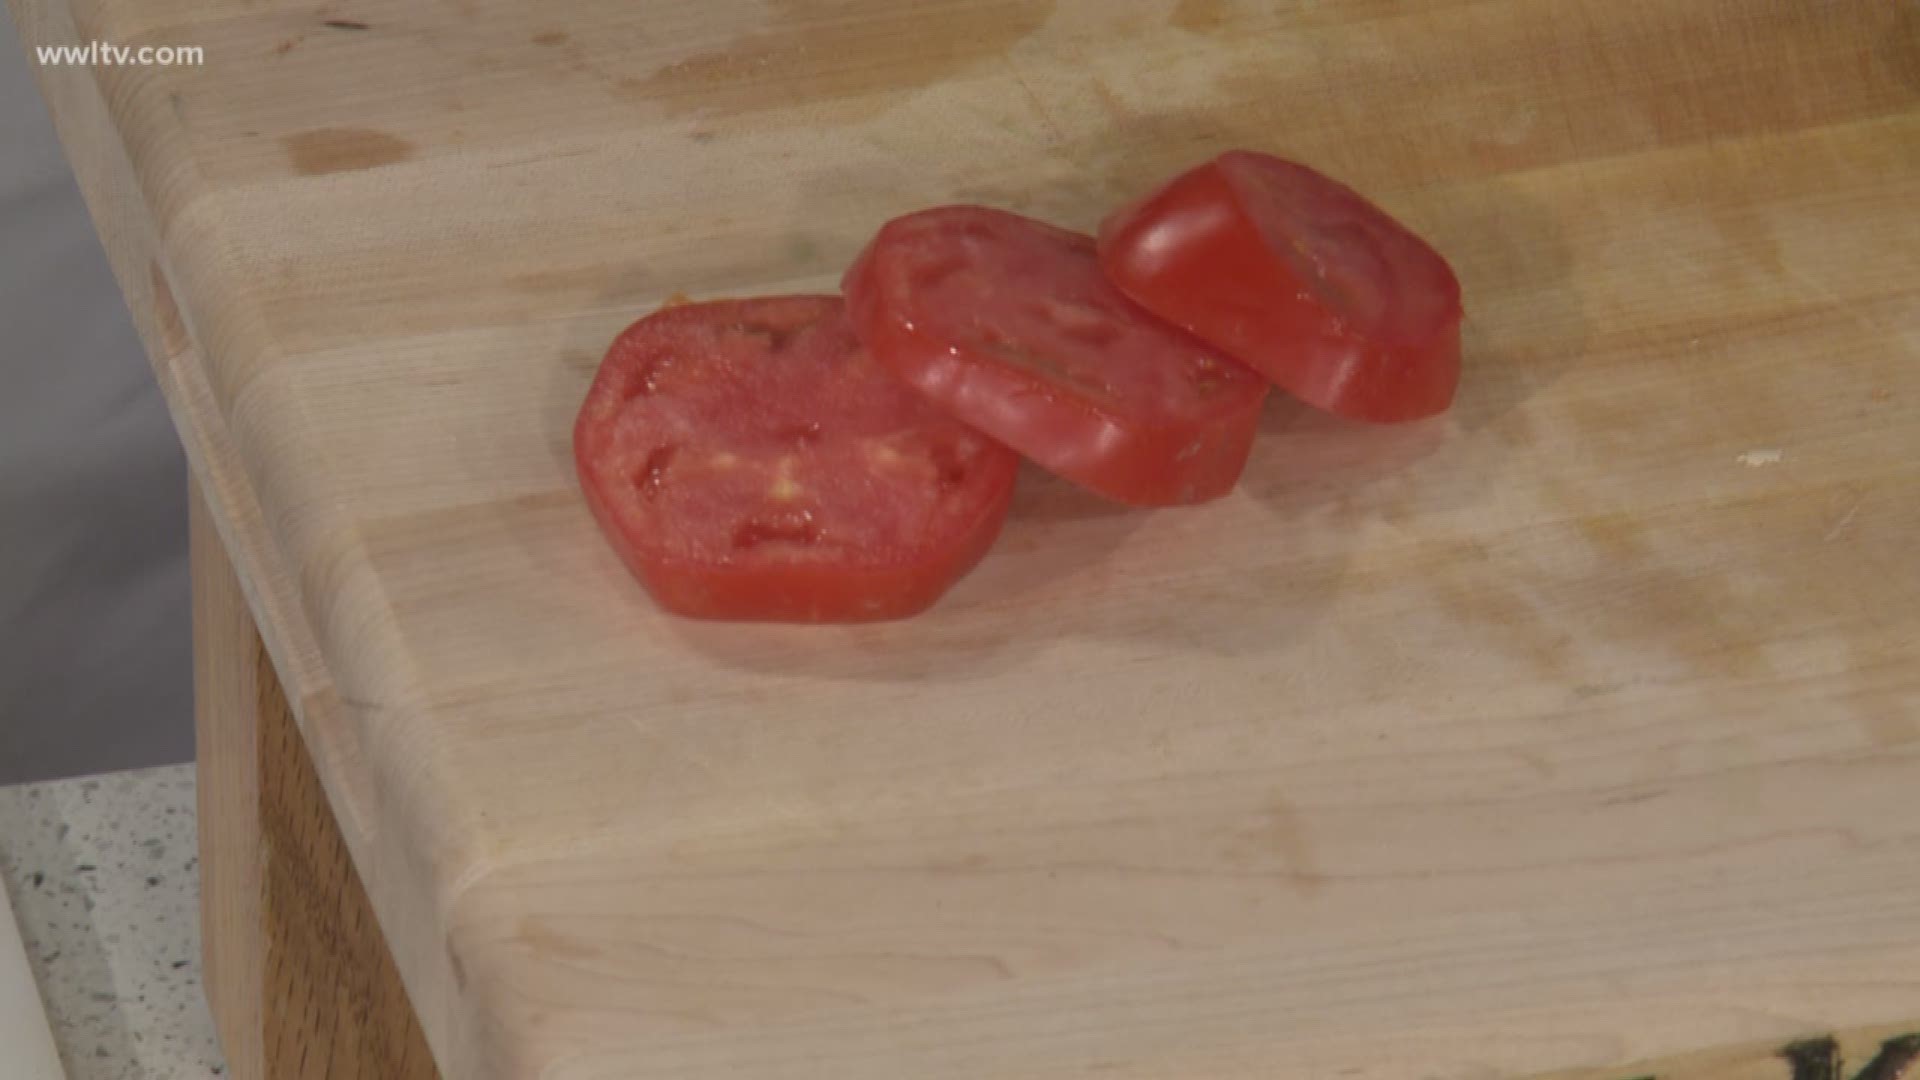 It's a creole tomato celebration!